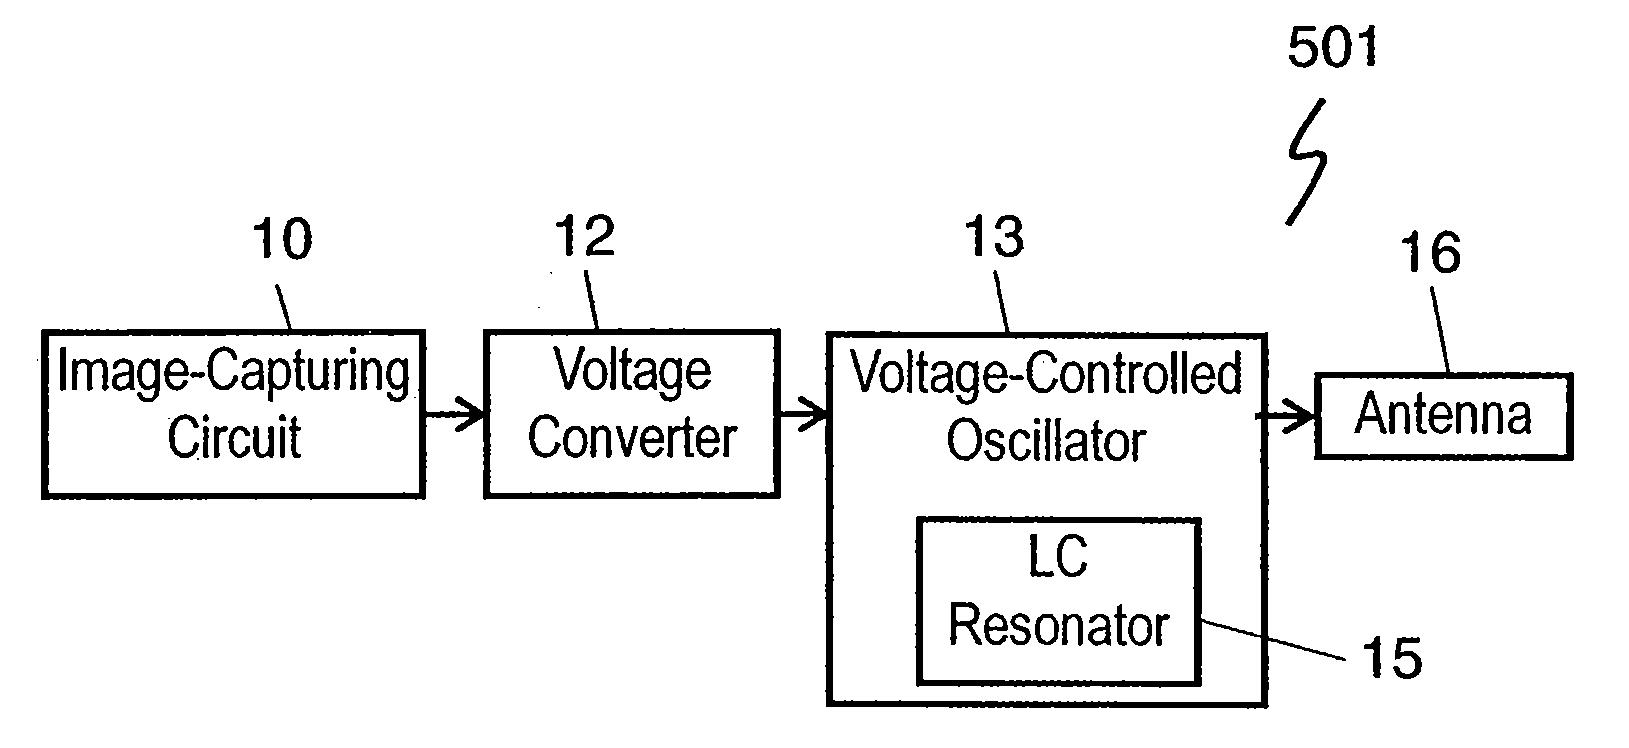 Transmitter, receiver, and transmission/reception system